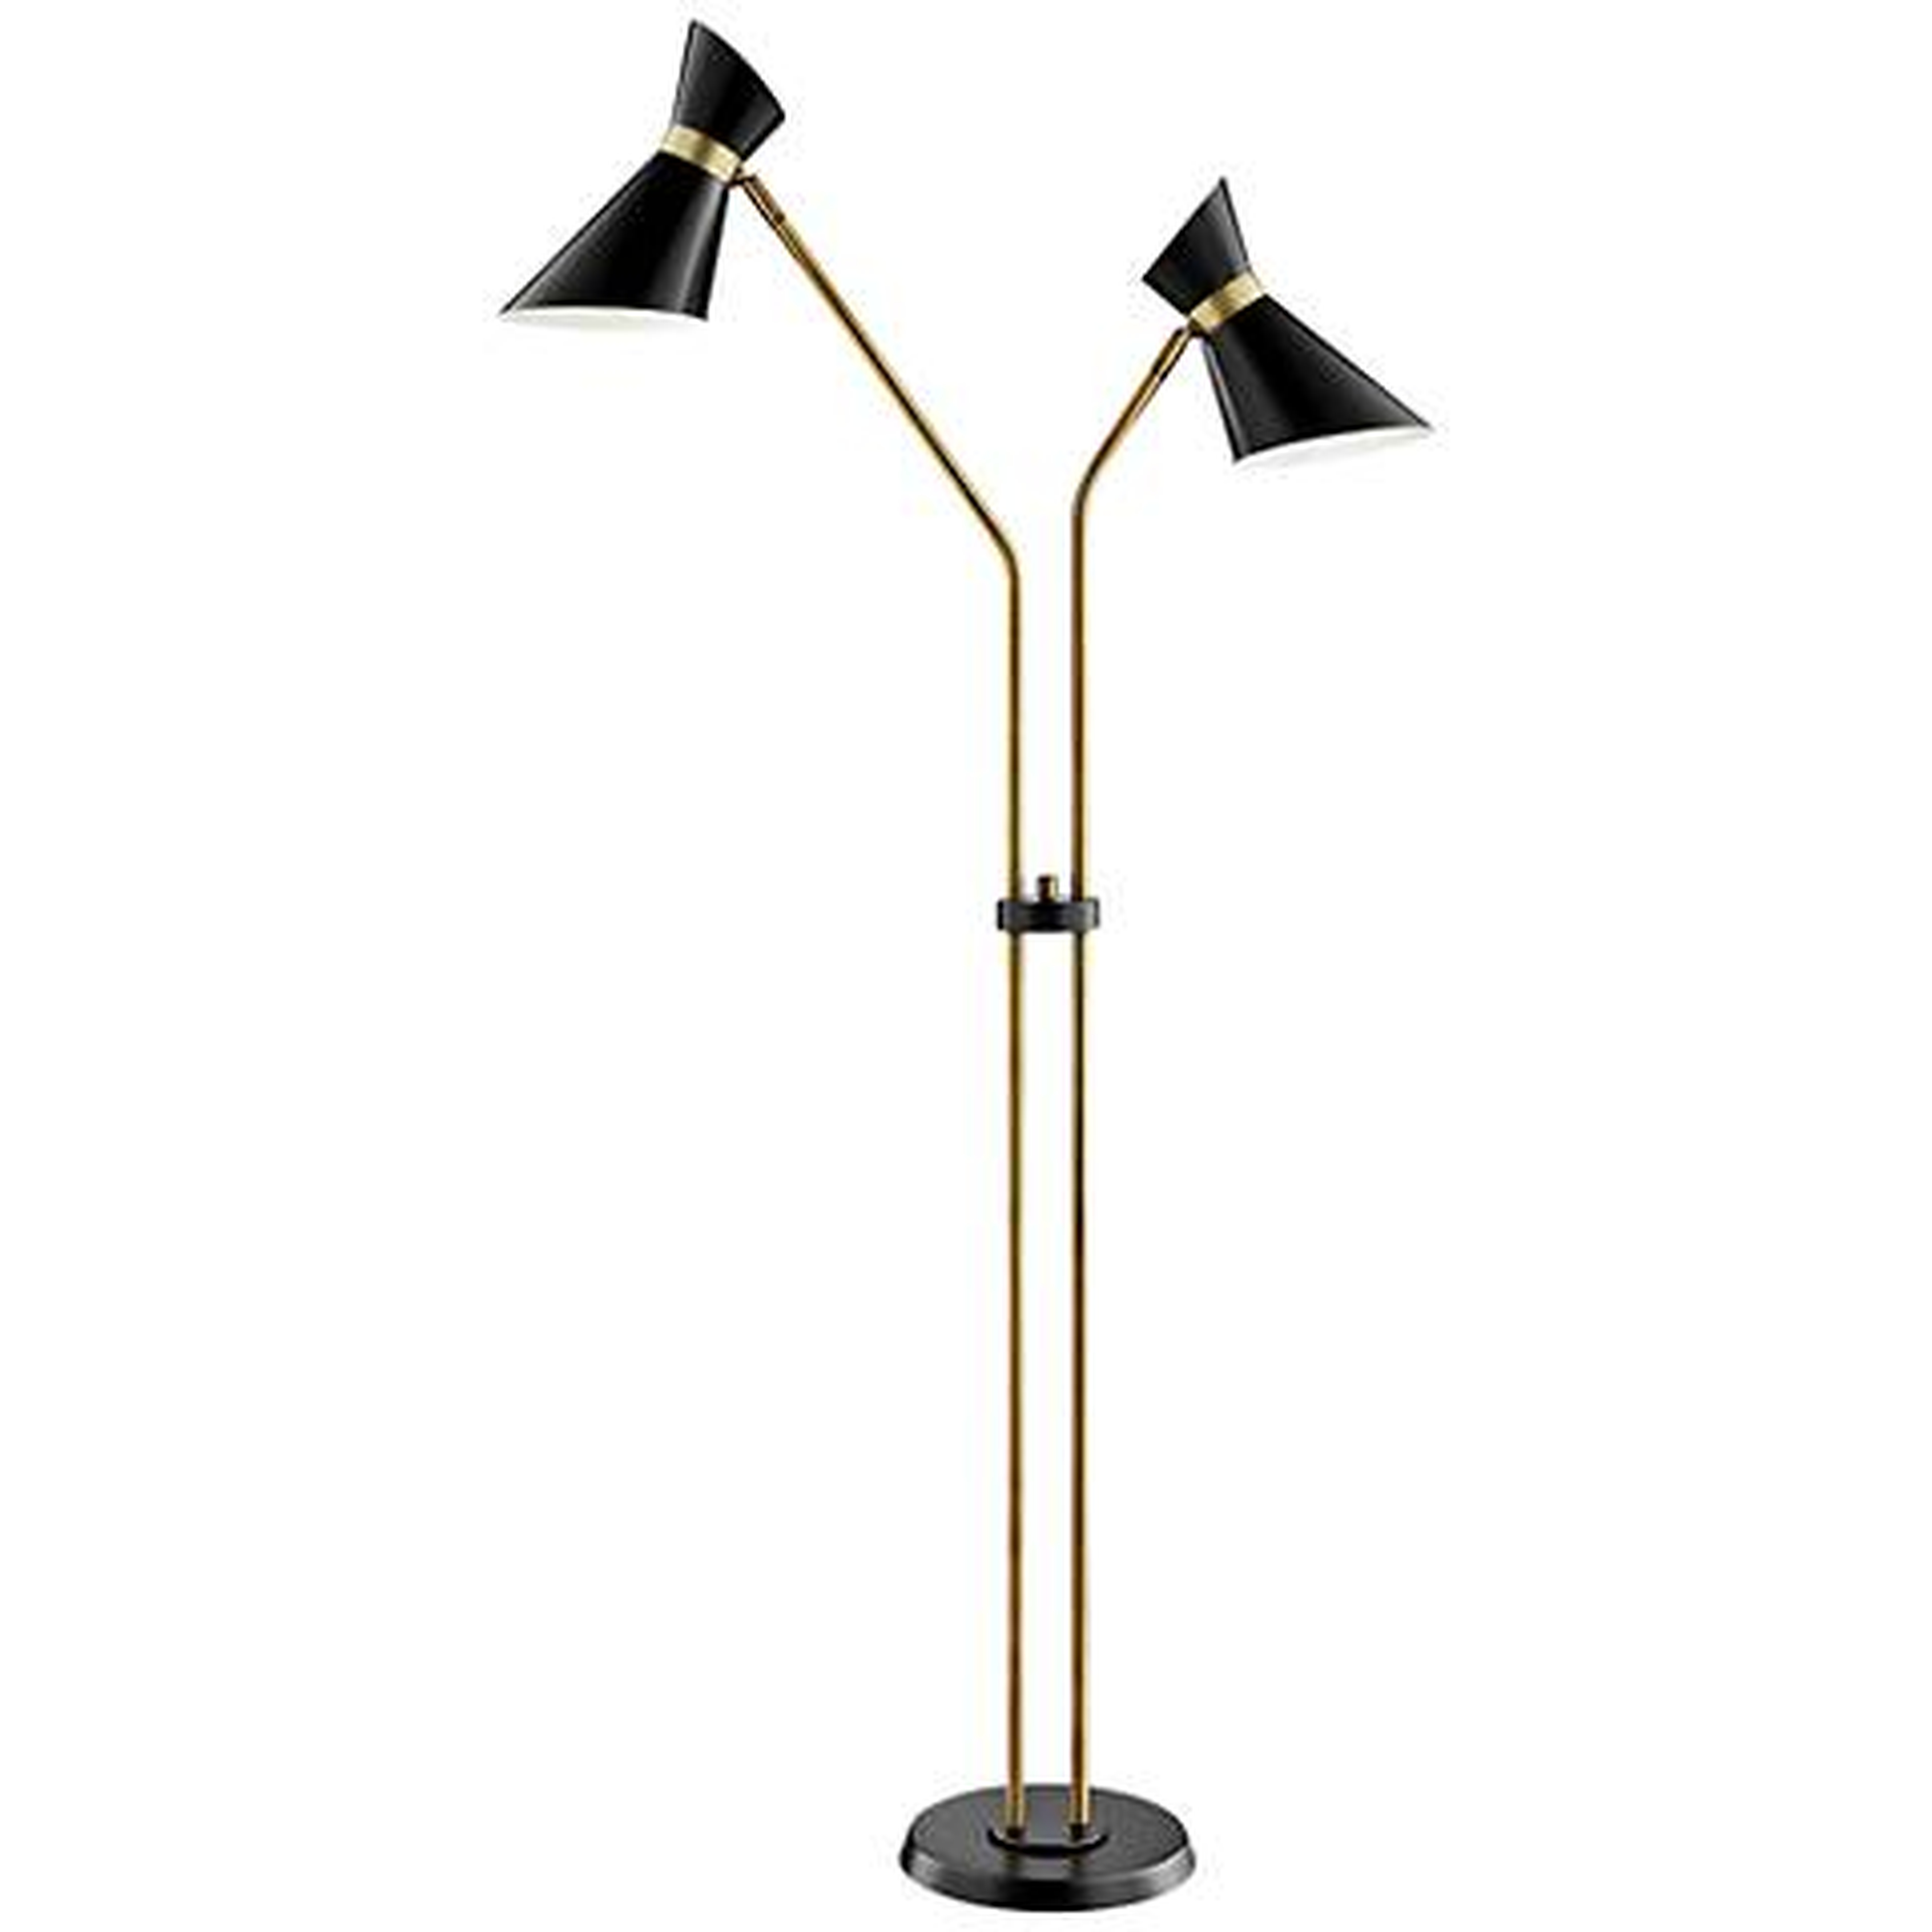 Lite Source Jared Black and Antique Brass 2-Arm Floor Lamp - Lamps Plus